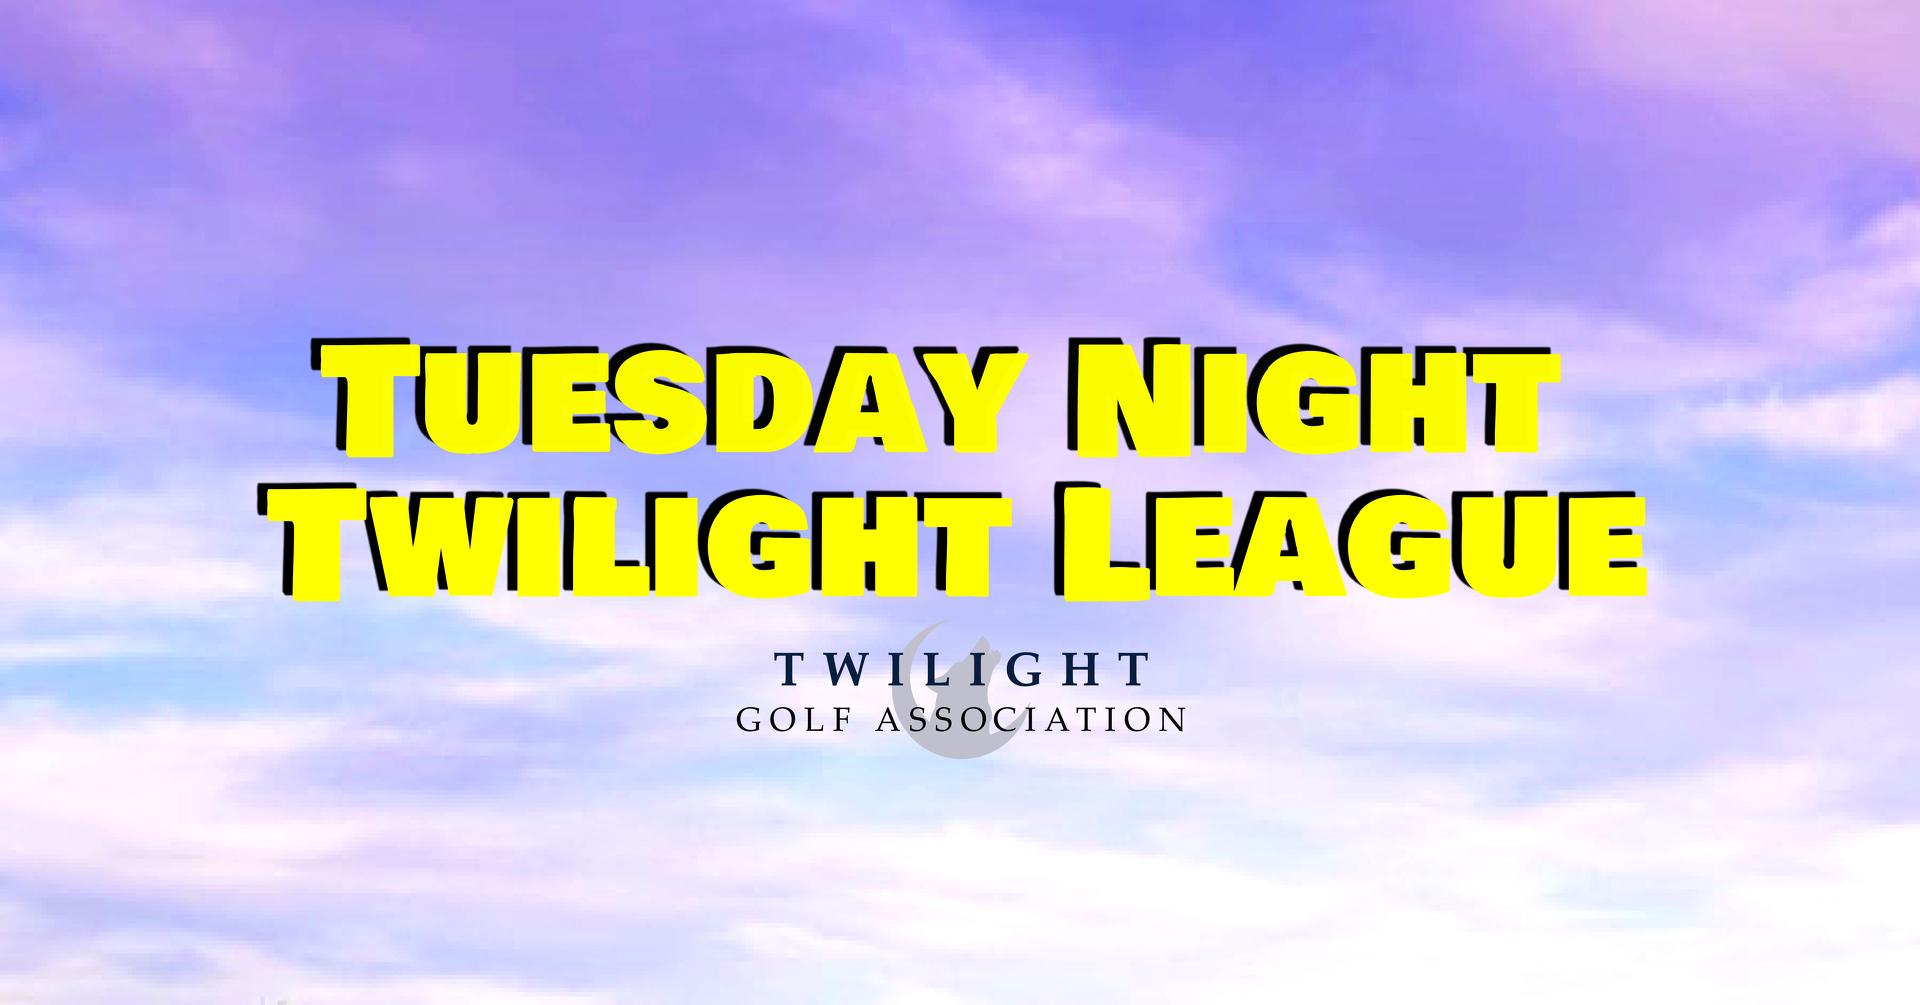 Tuesday Twilight League at Oak Creek Golf Club